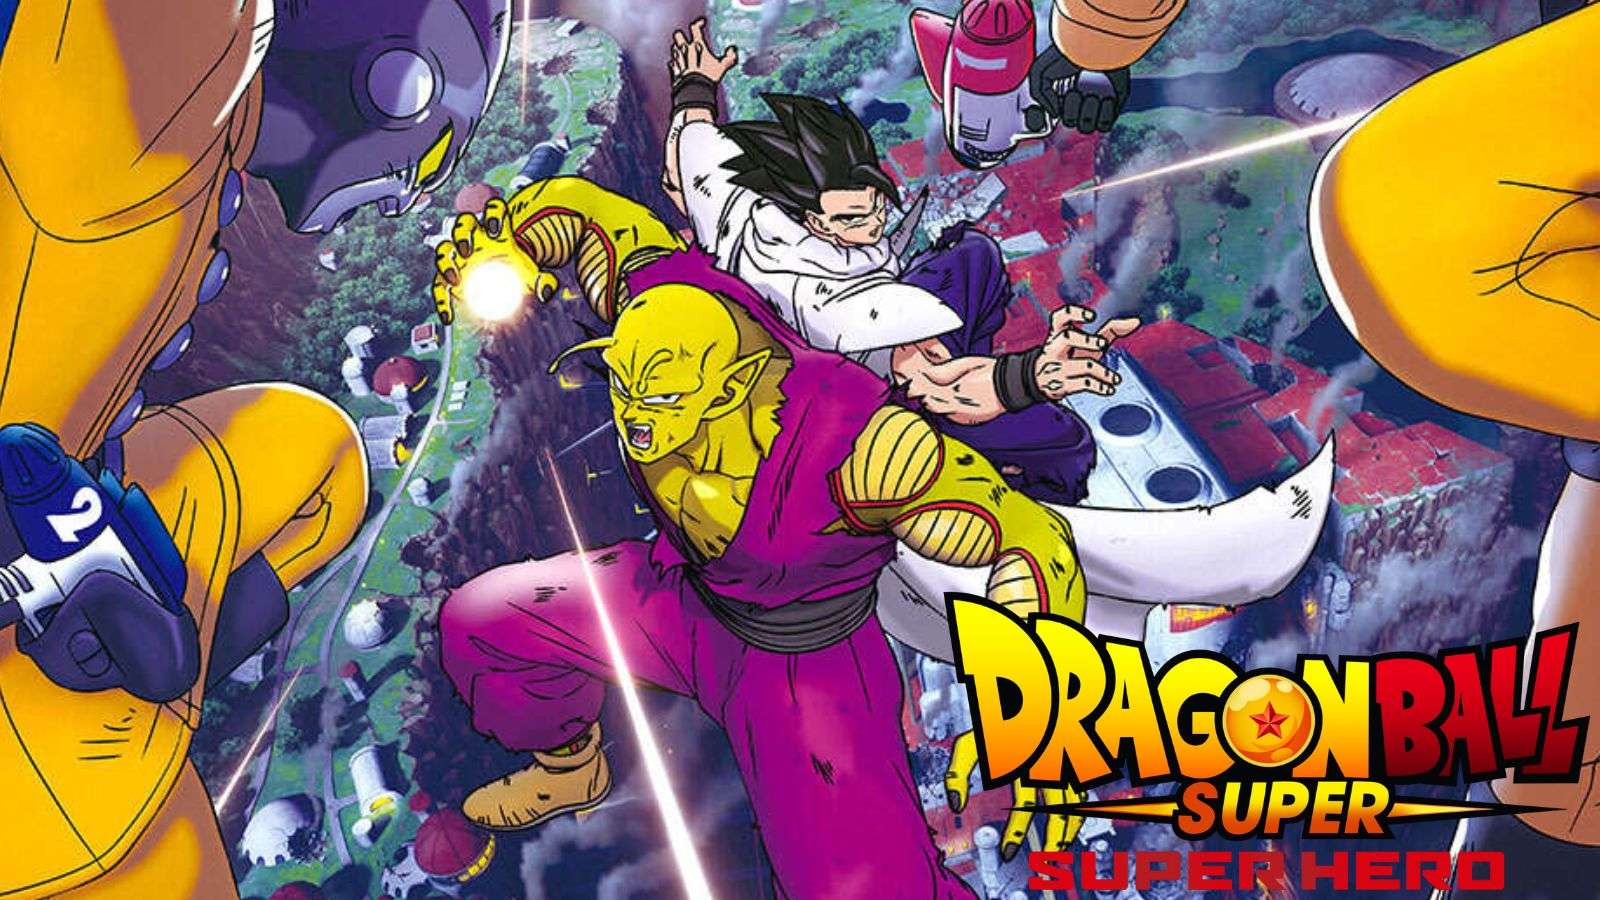 Dragon ball super: super hero poster